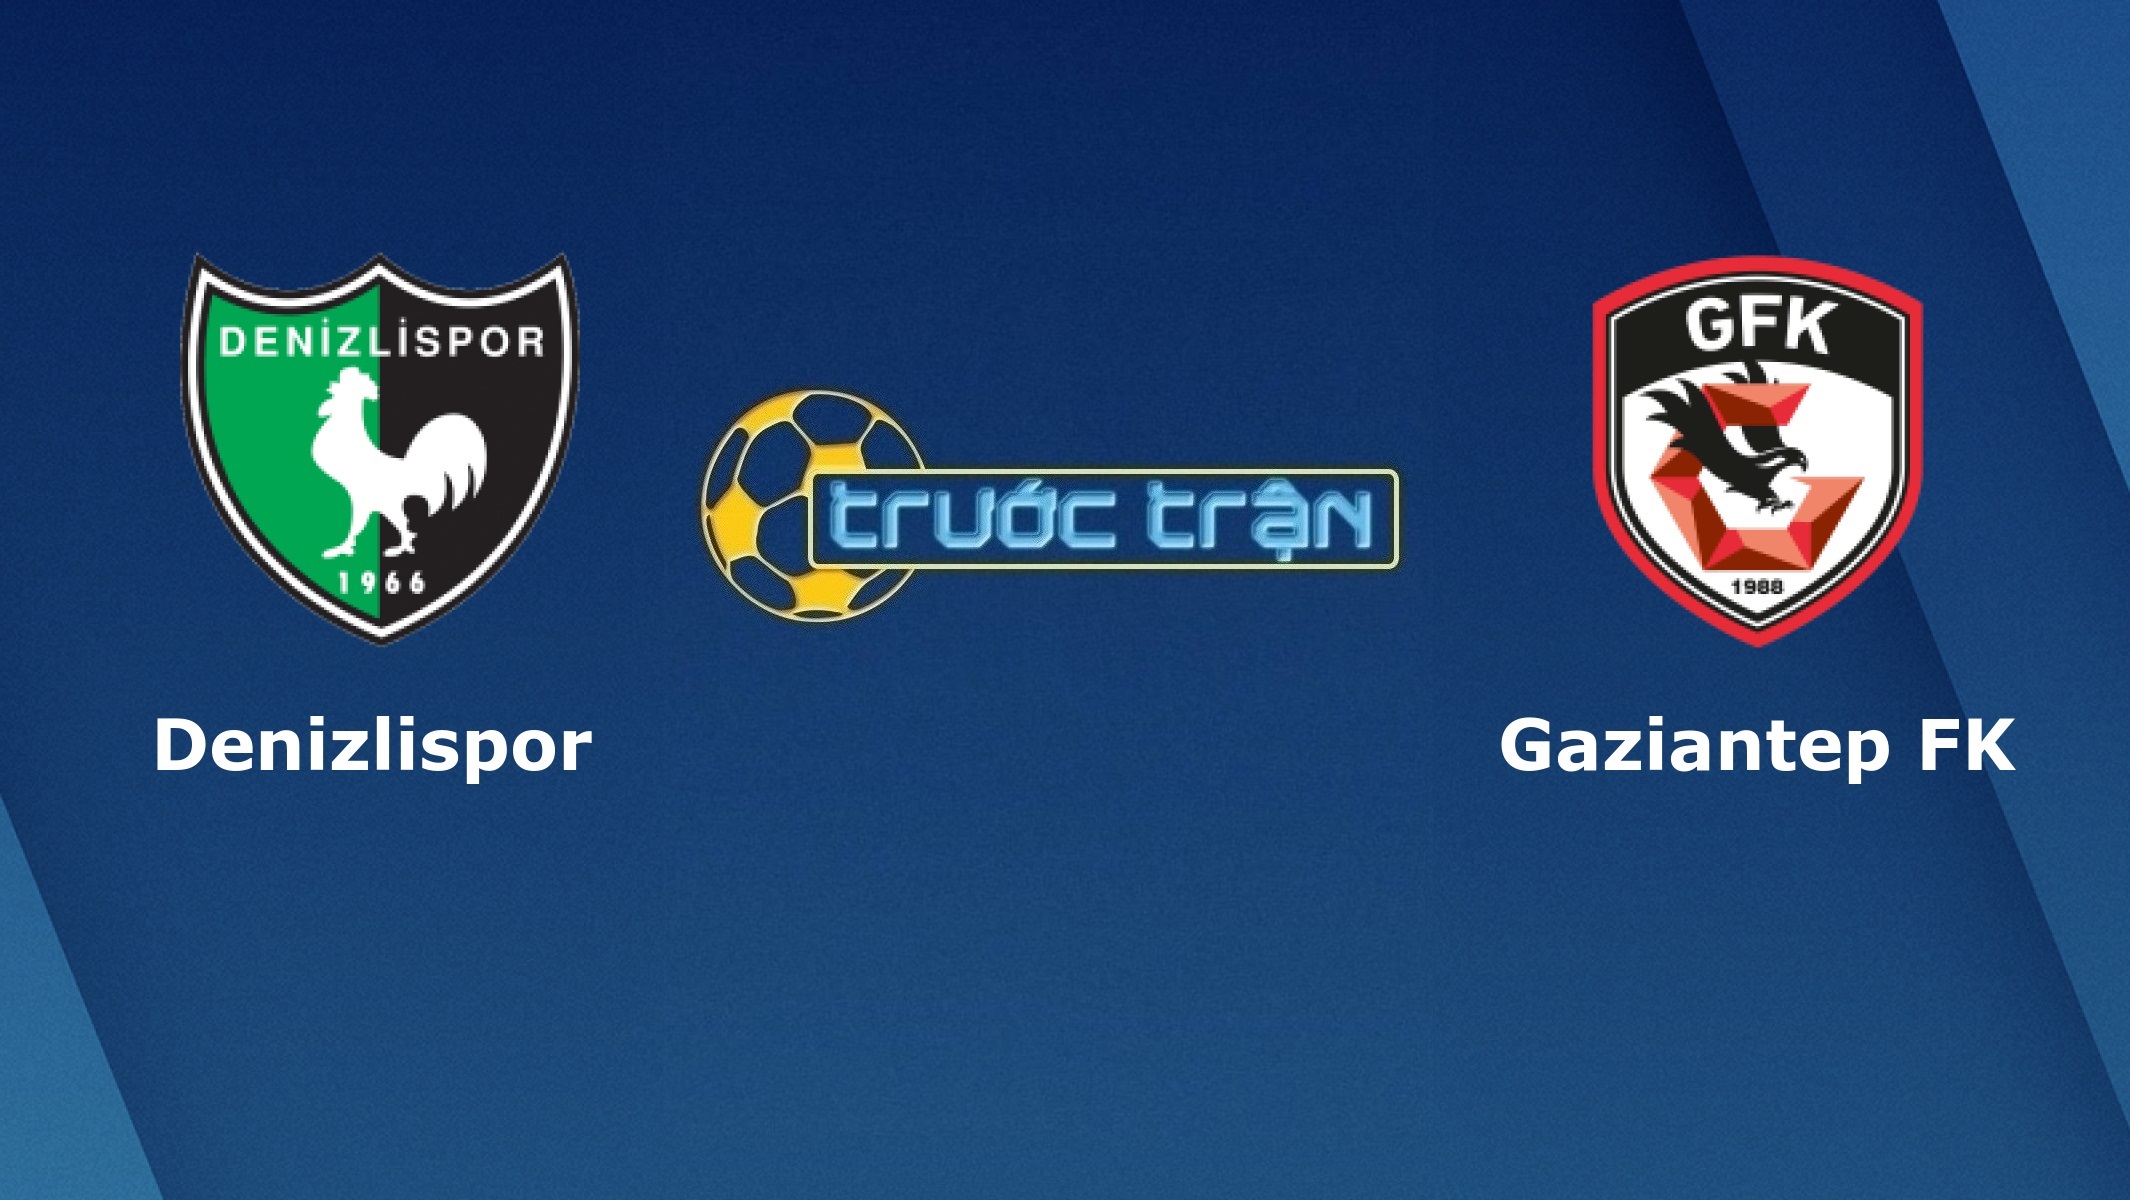 Denizlispor vs Gazisehir Gaziantep – Tip kèo bóng đá hôm nay – 04/07